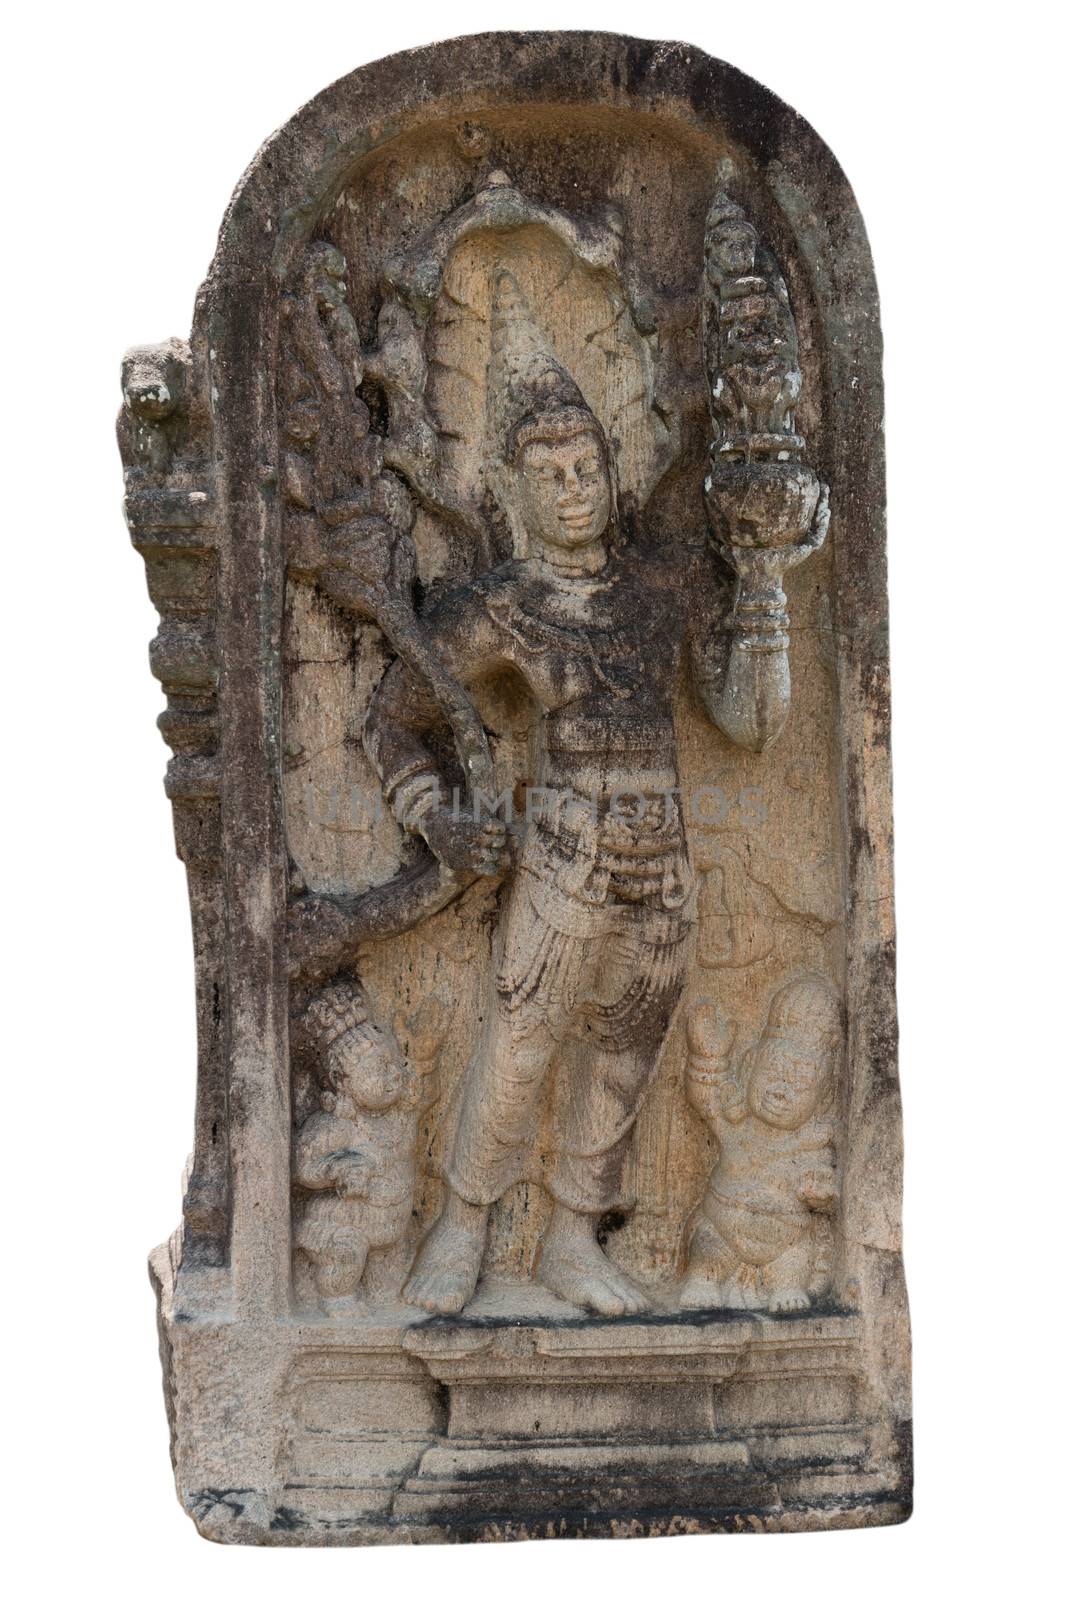 Ancient guardstone at vatadage in Polonnaruwa, Sri Lanka by iryna_rasko